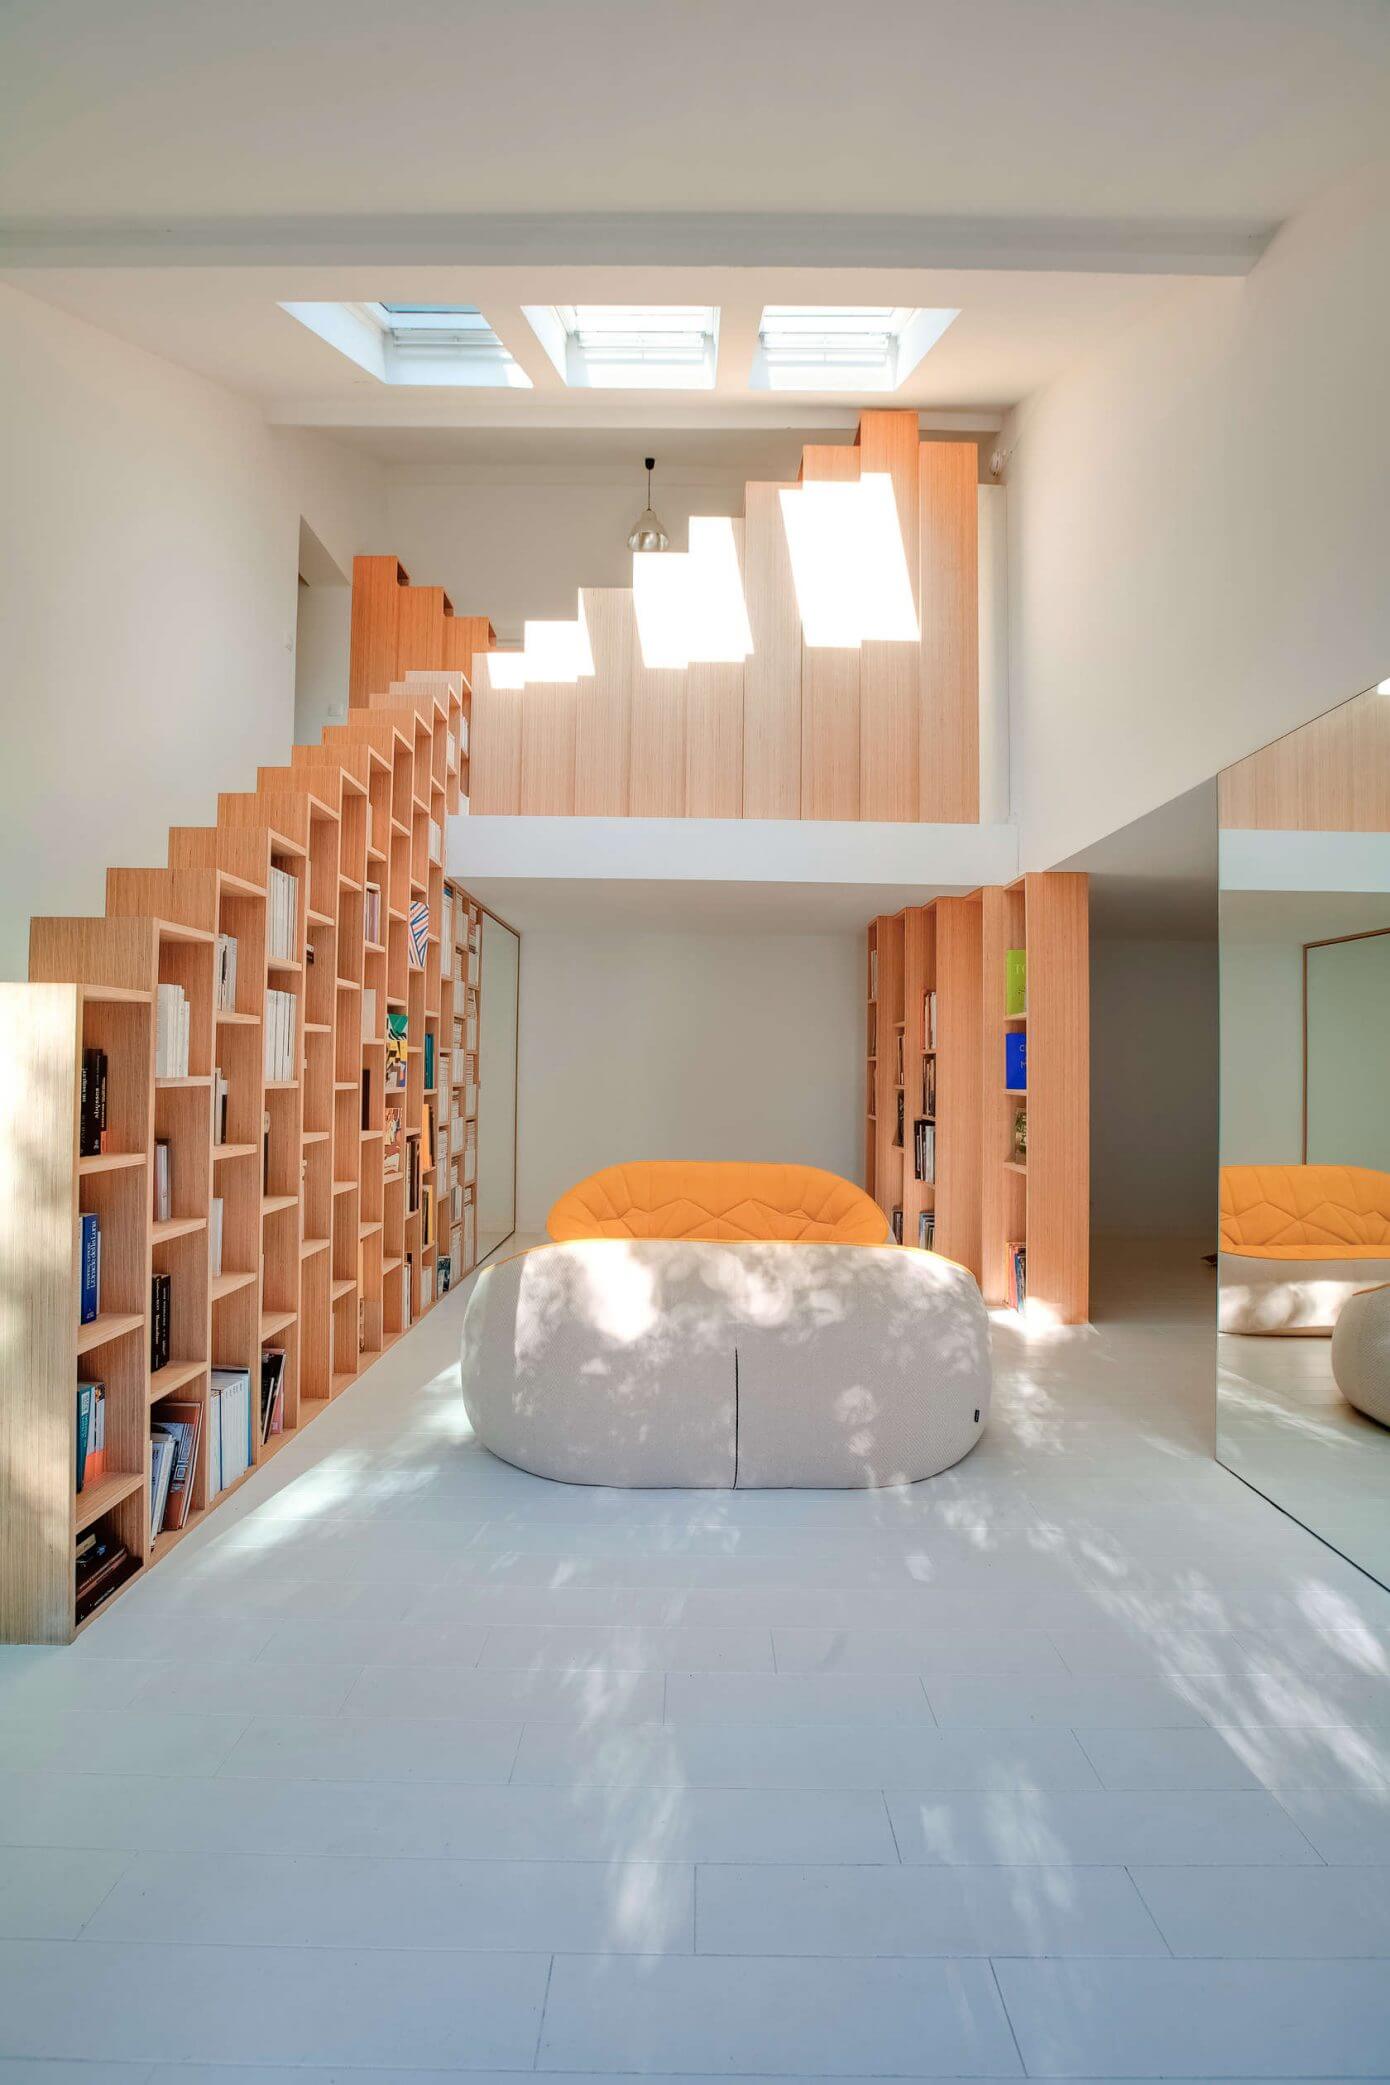 Bookshelf House by Andrea Mosca Creative Studio